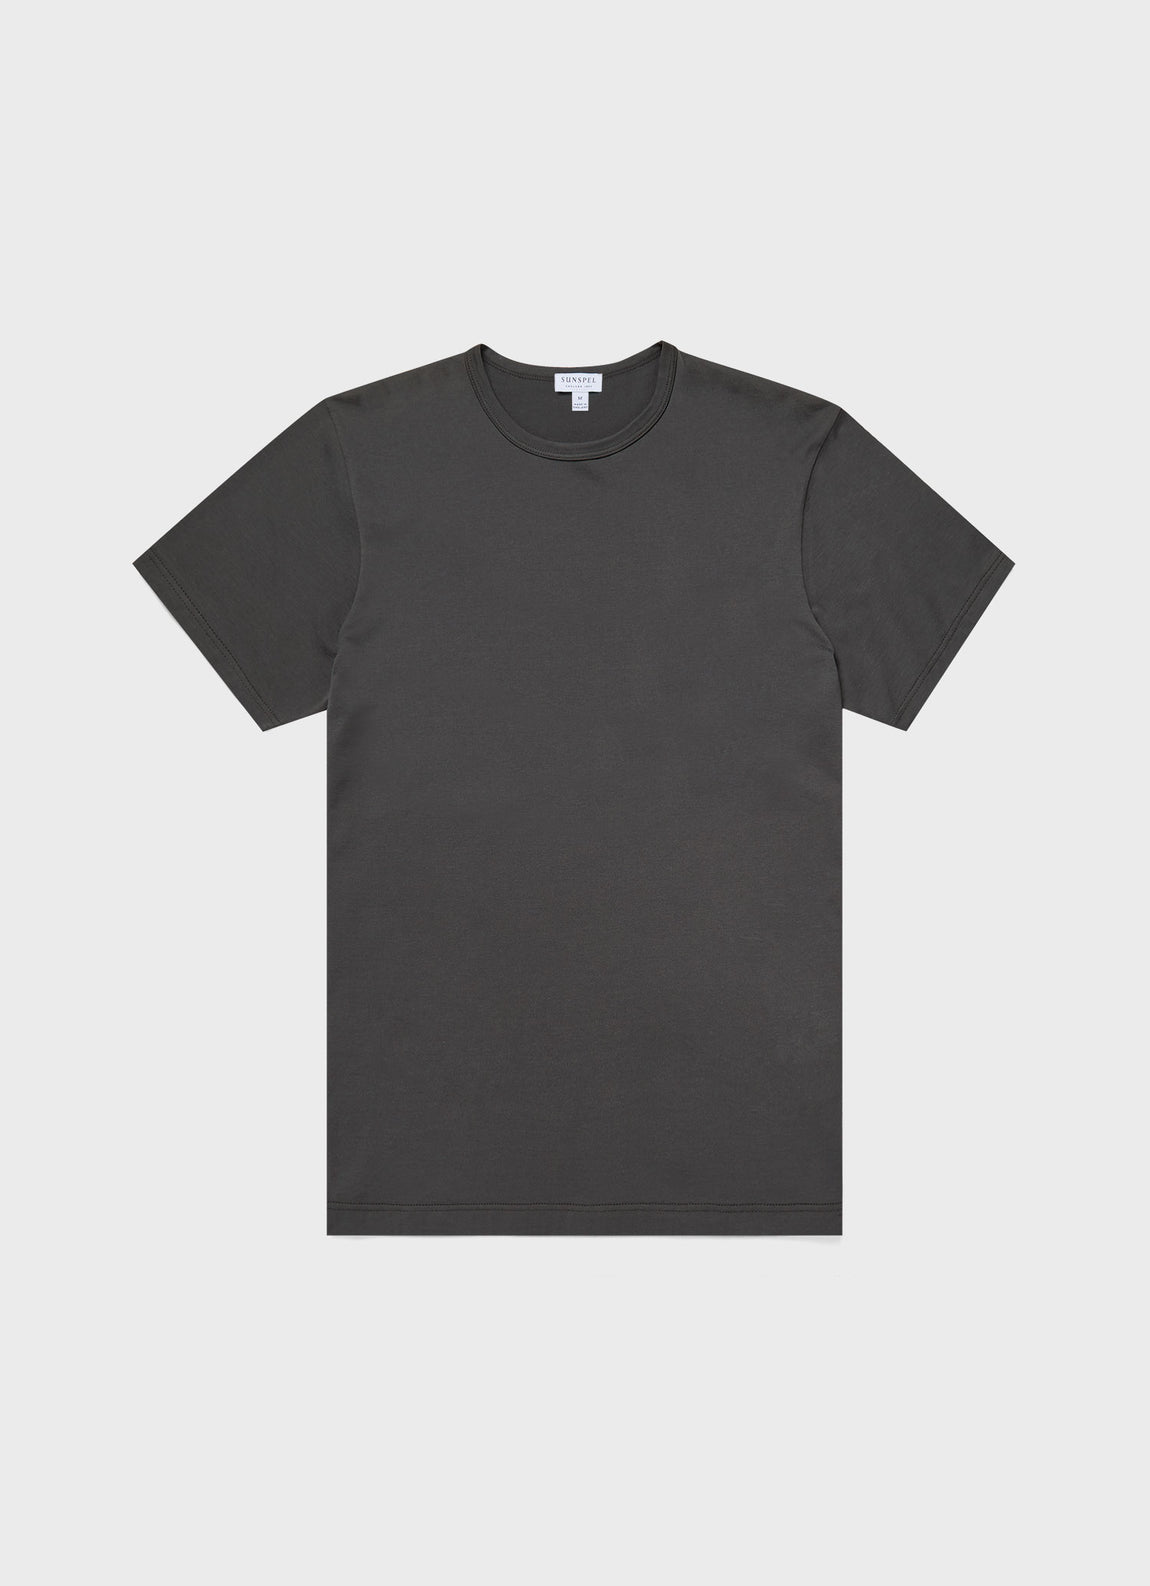 Men's Classic T-shirt in Charcoal | Sunspel